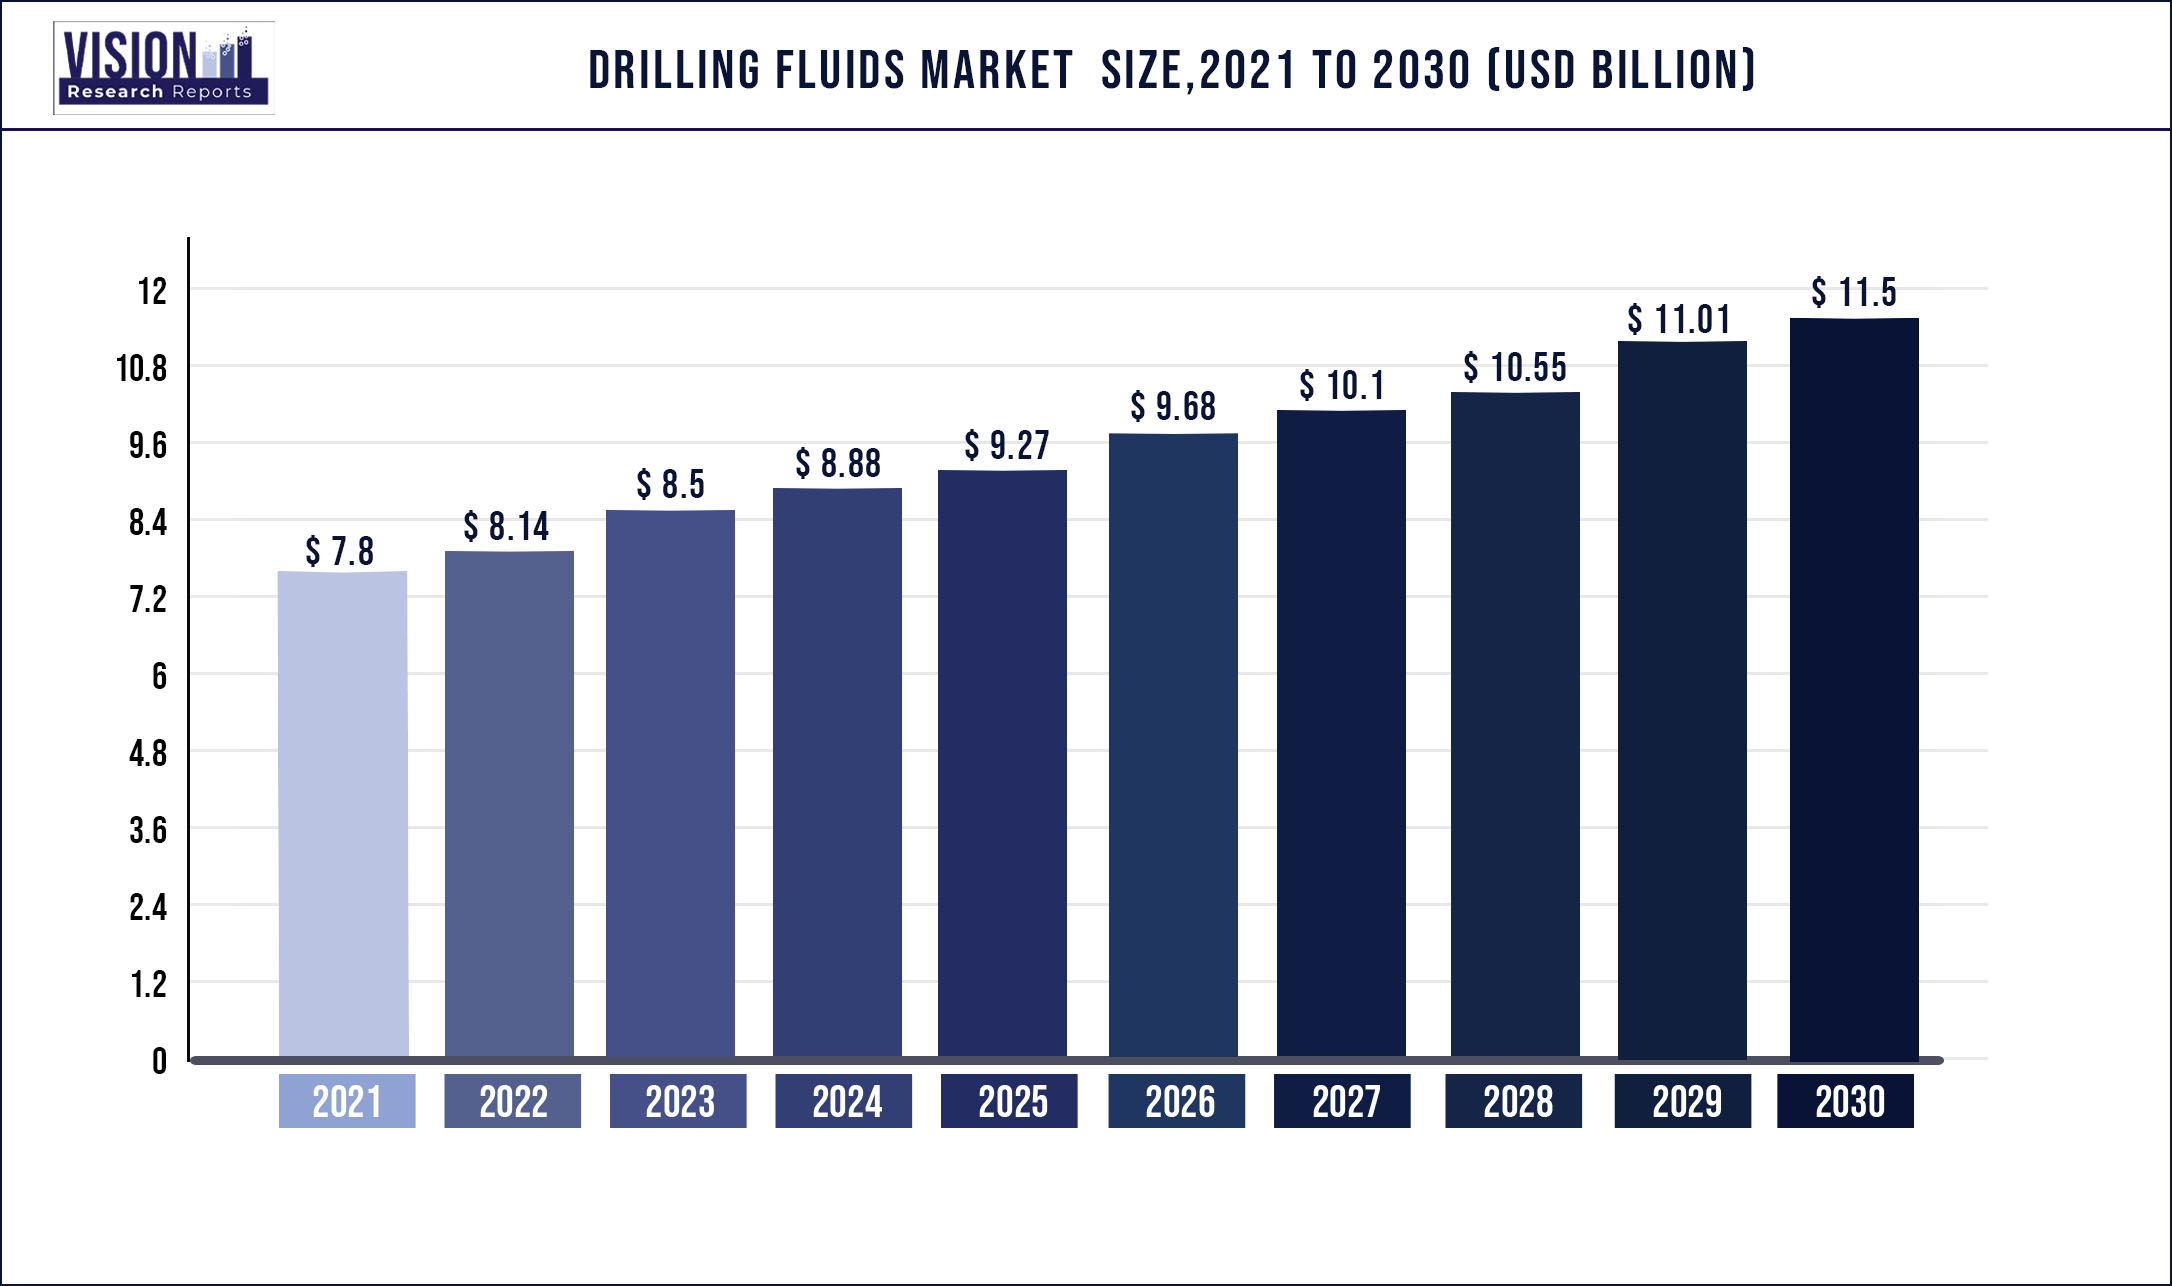 Drilling Fluids Market Size 2021 to 2030